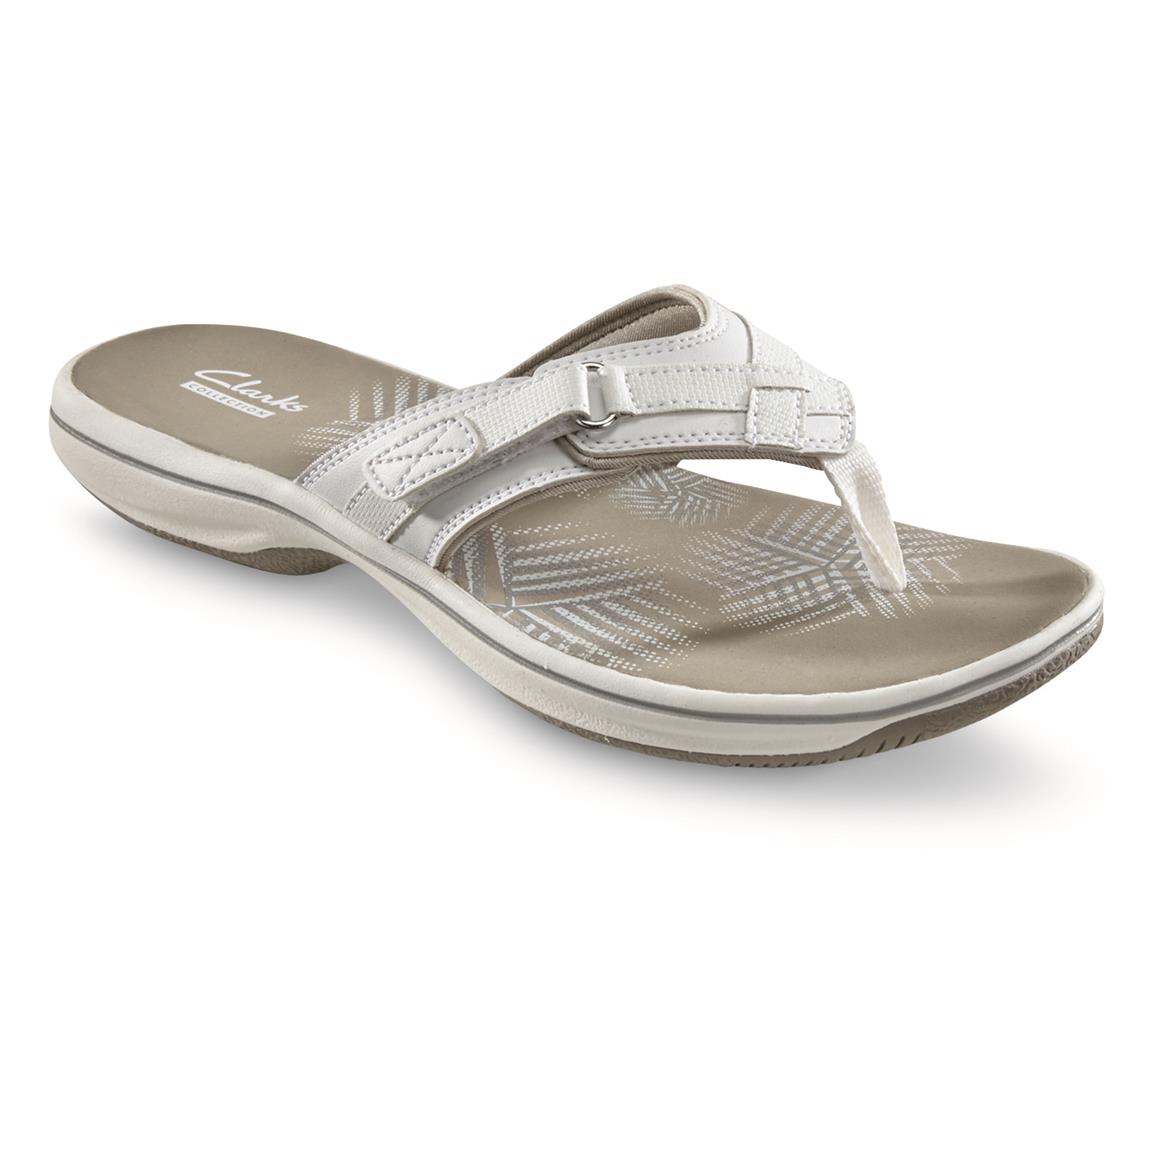 Clarks Women's Breeze Sea Sandals - 680849, Sandals & Flip Flops at ...